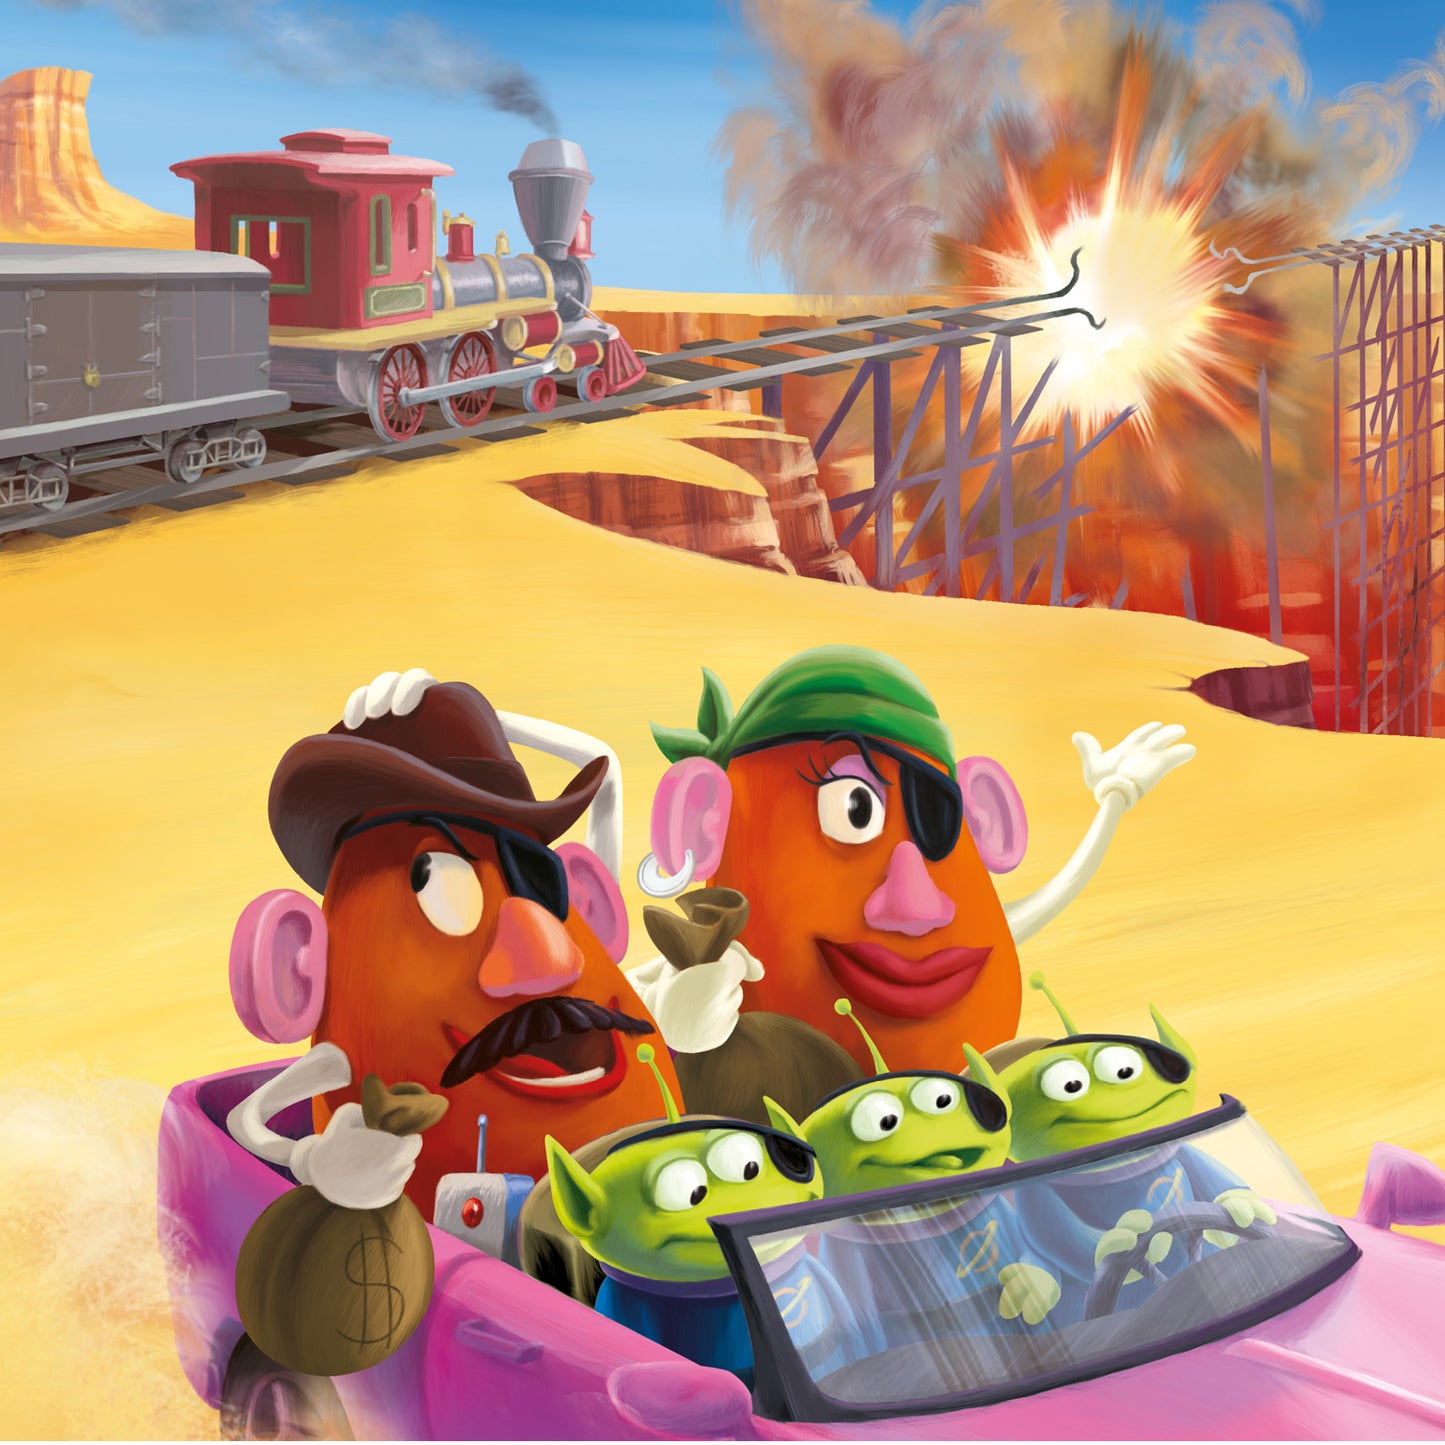 Disney Pixar Toy Story My Carry-Along Storybook | Foam Book | Purse book | Toy Story Storybook